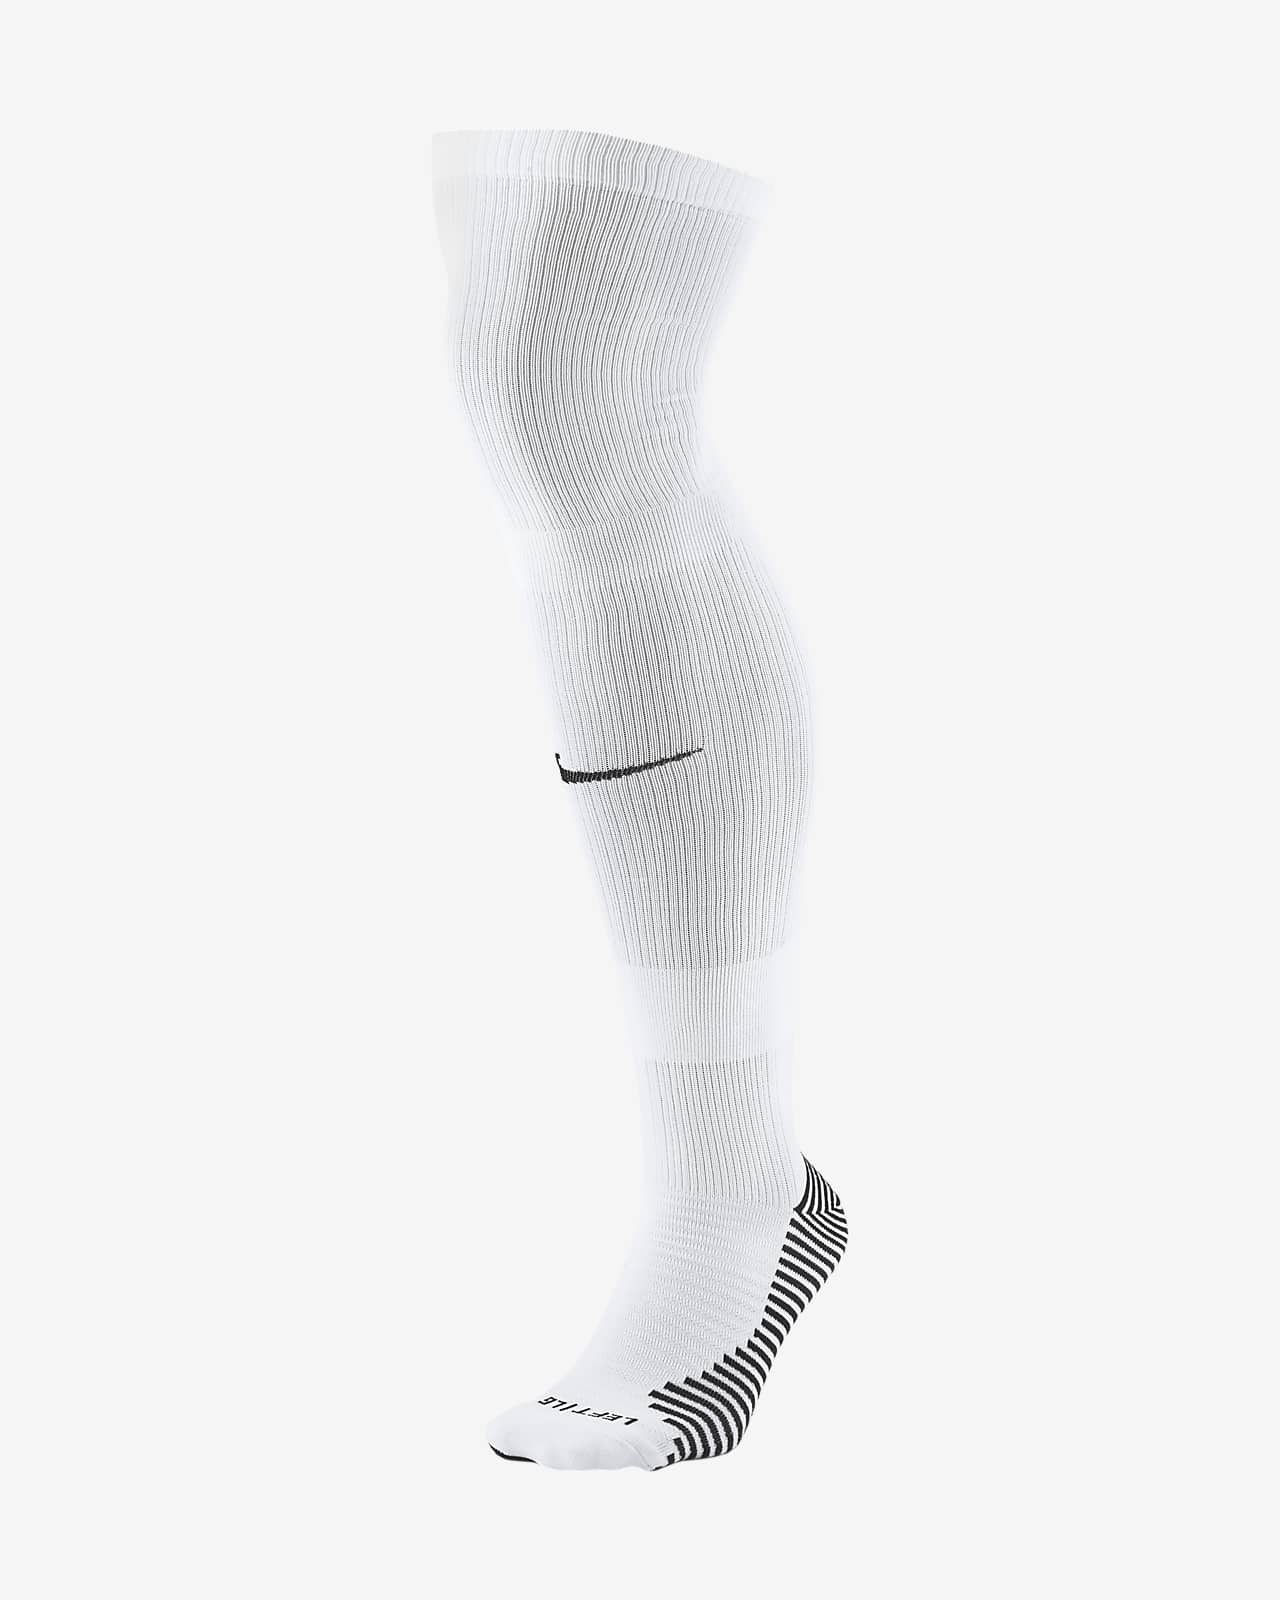 nike matchfit soccer socks